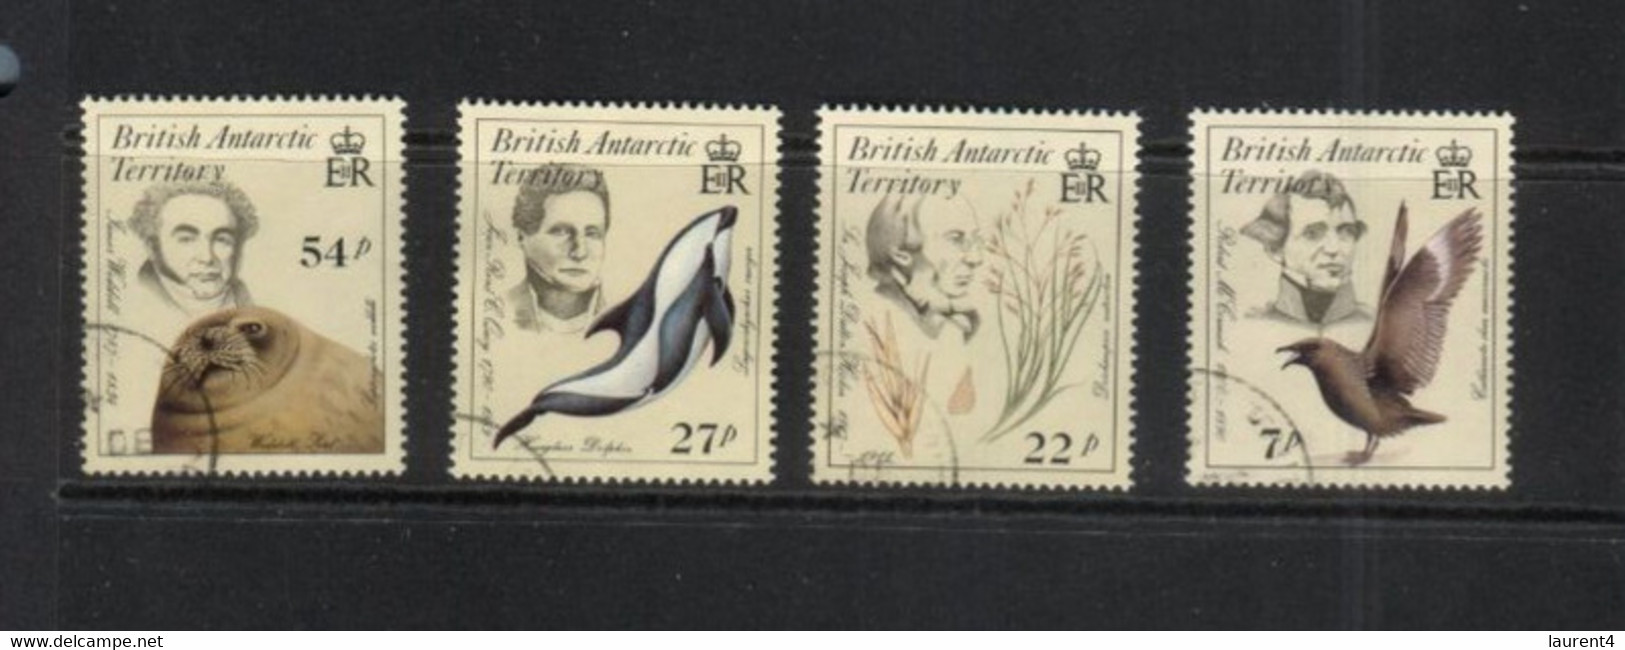 (8-10-2020) British Antarctic Territory - 4 Used Stamps  (Explorer) - Usati